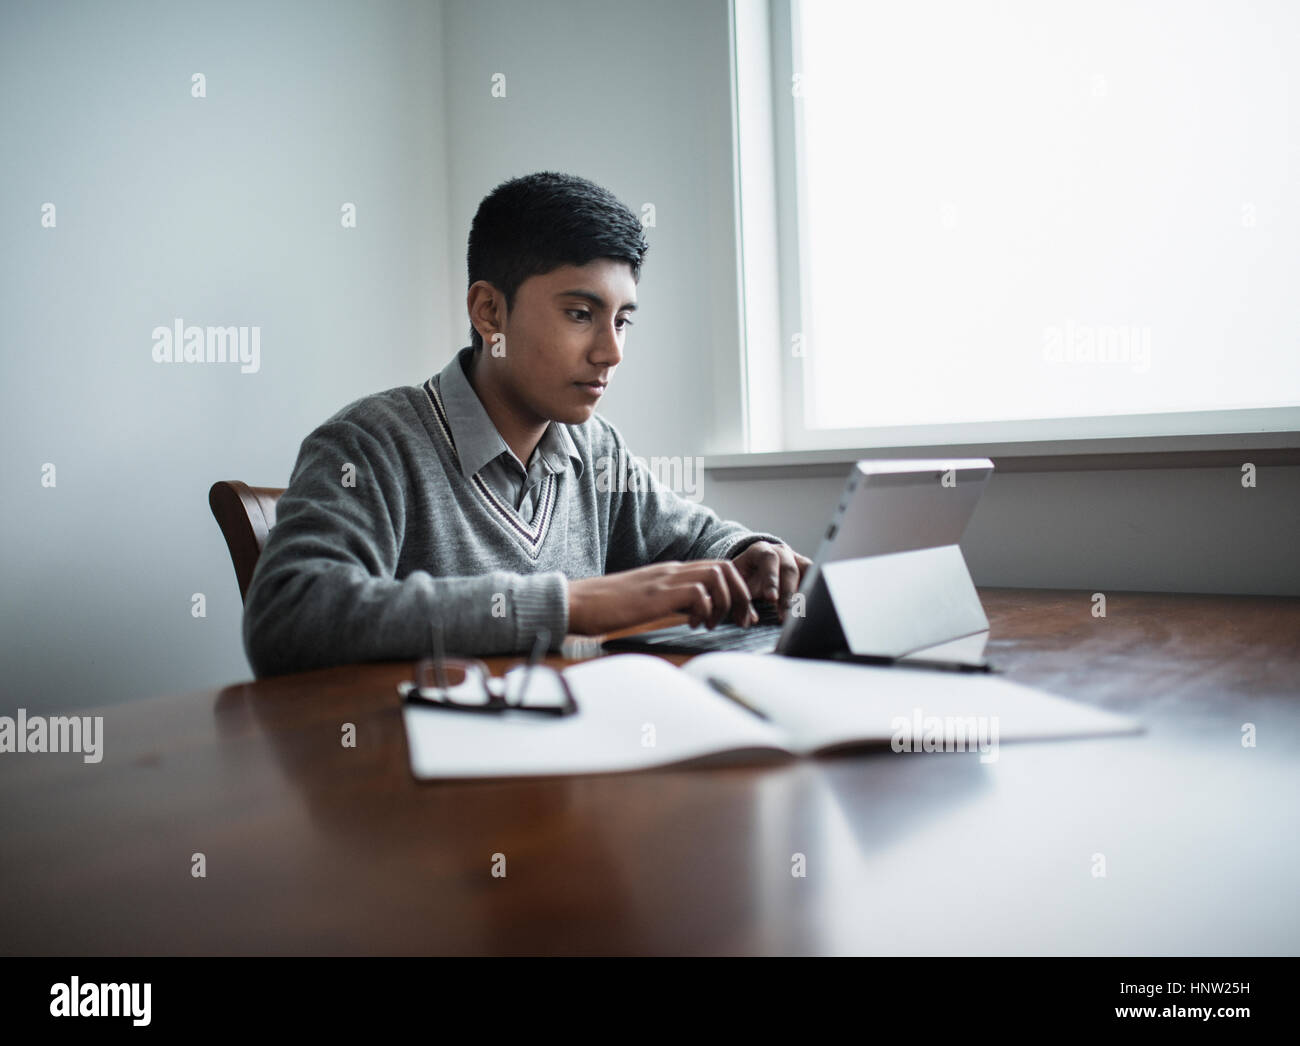 Fiji Indian boy using digital tablet Stock Photo